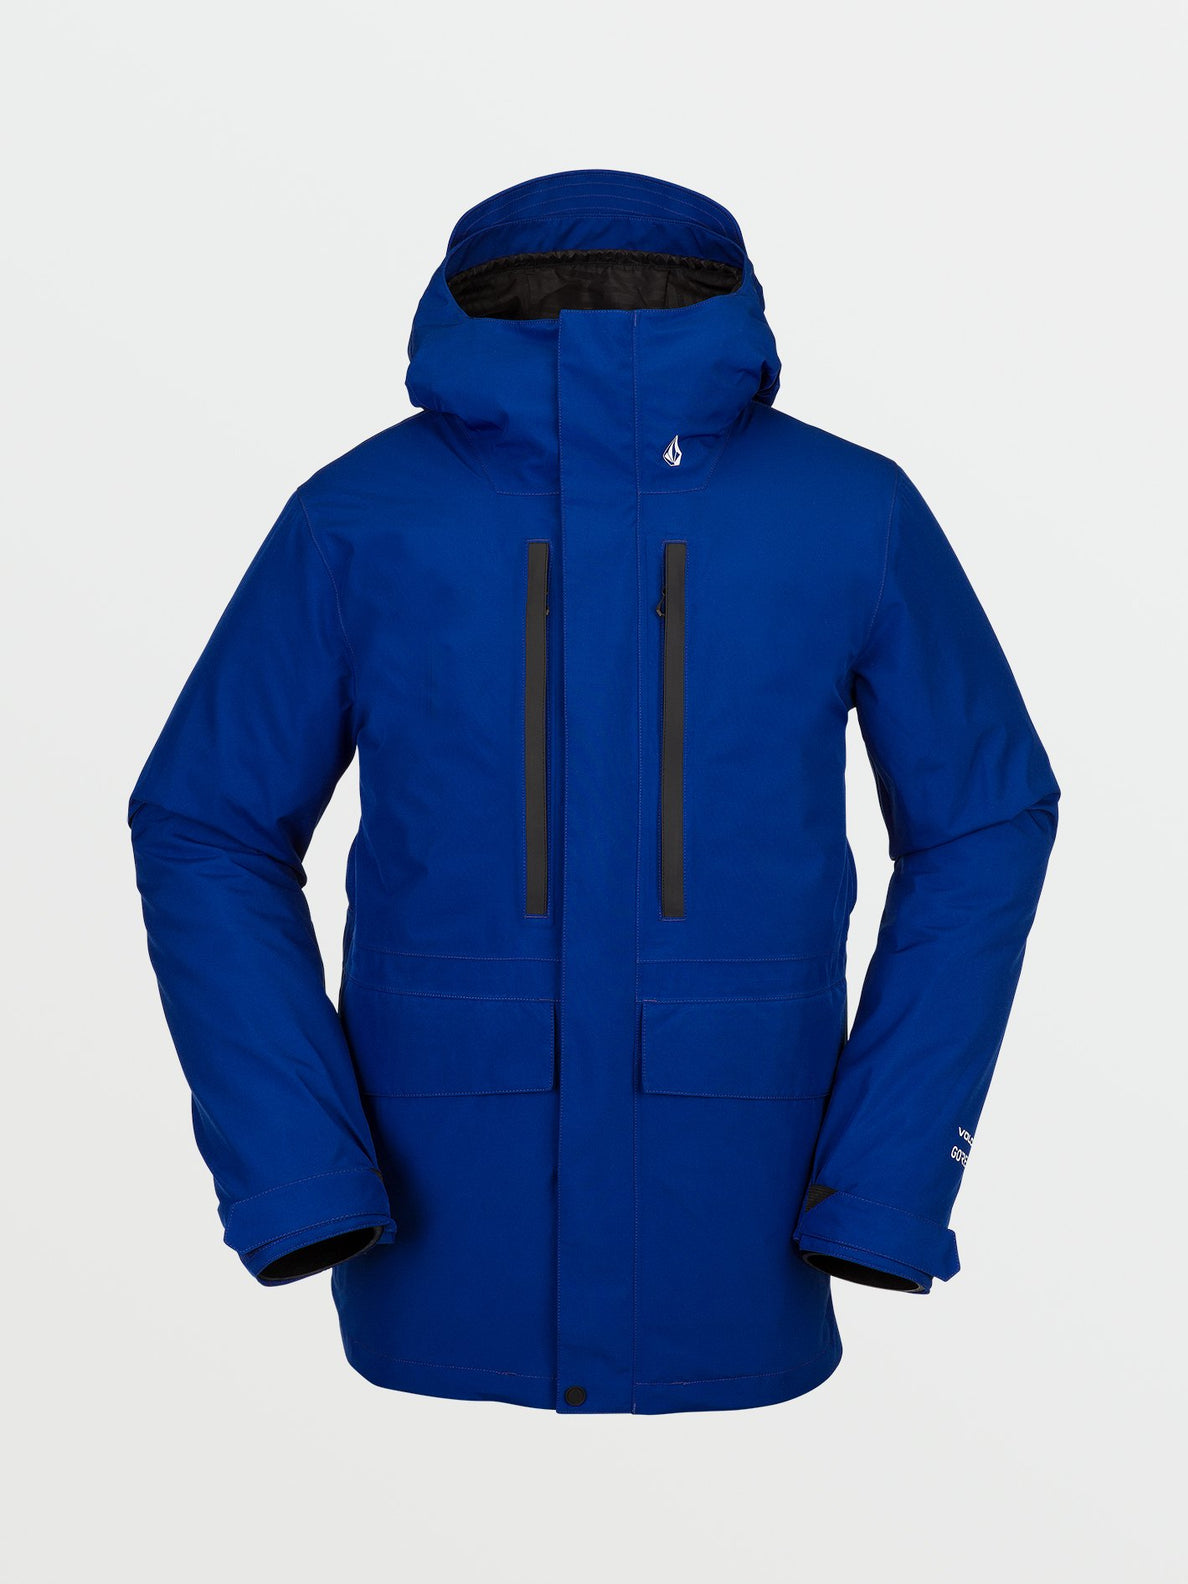 Ten Insulated Gore-Tex Jacket - BRIGHT BLUE (G0452204_BBL) [F]